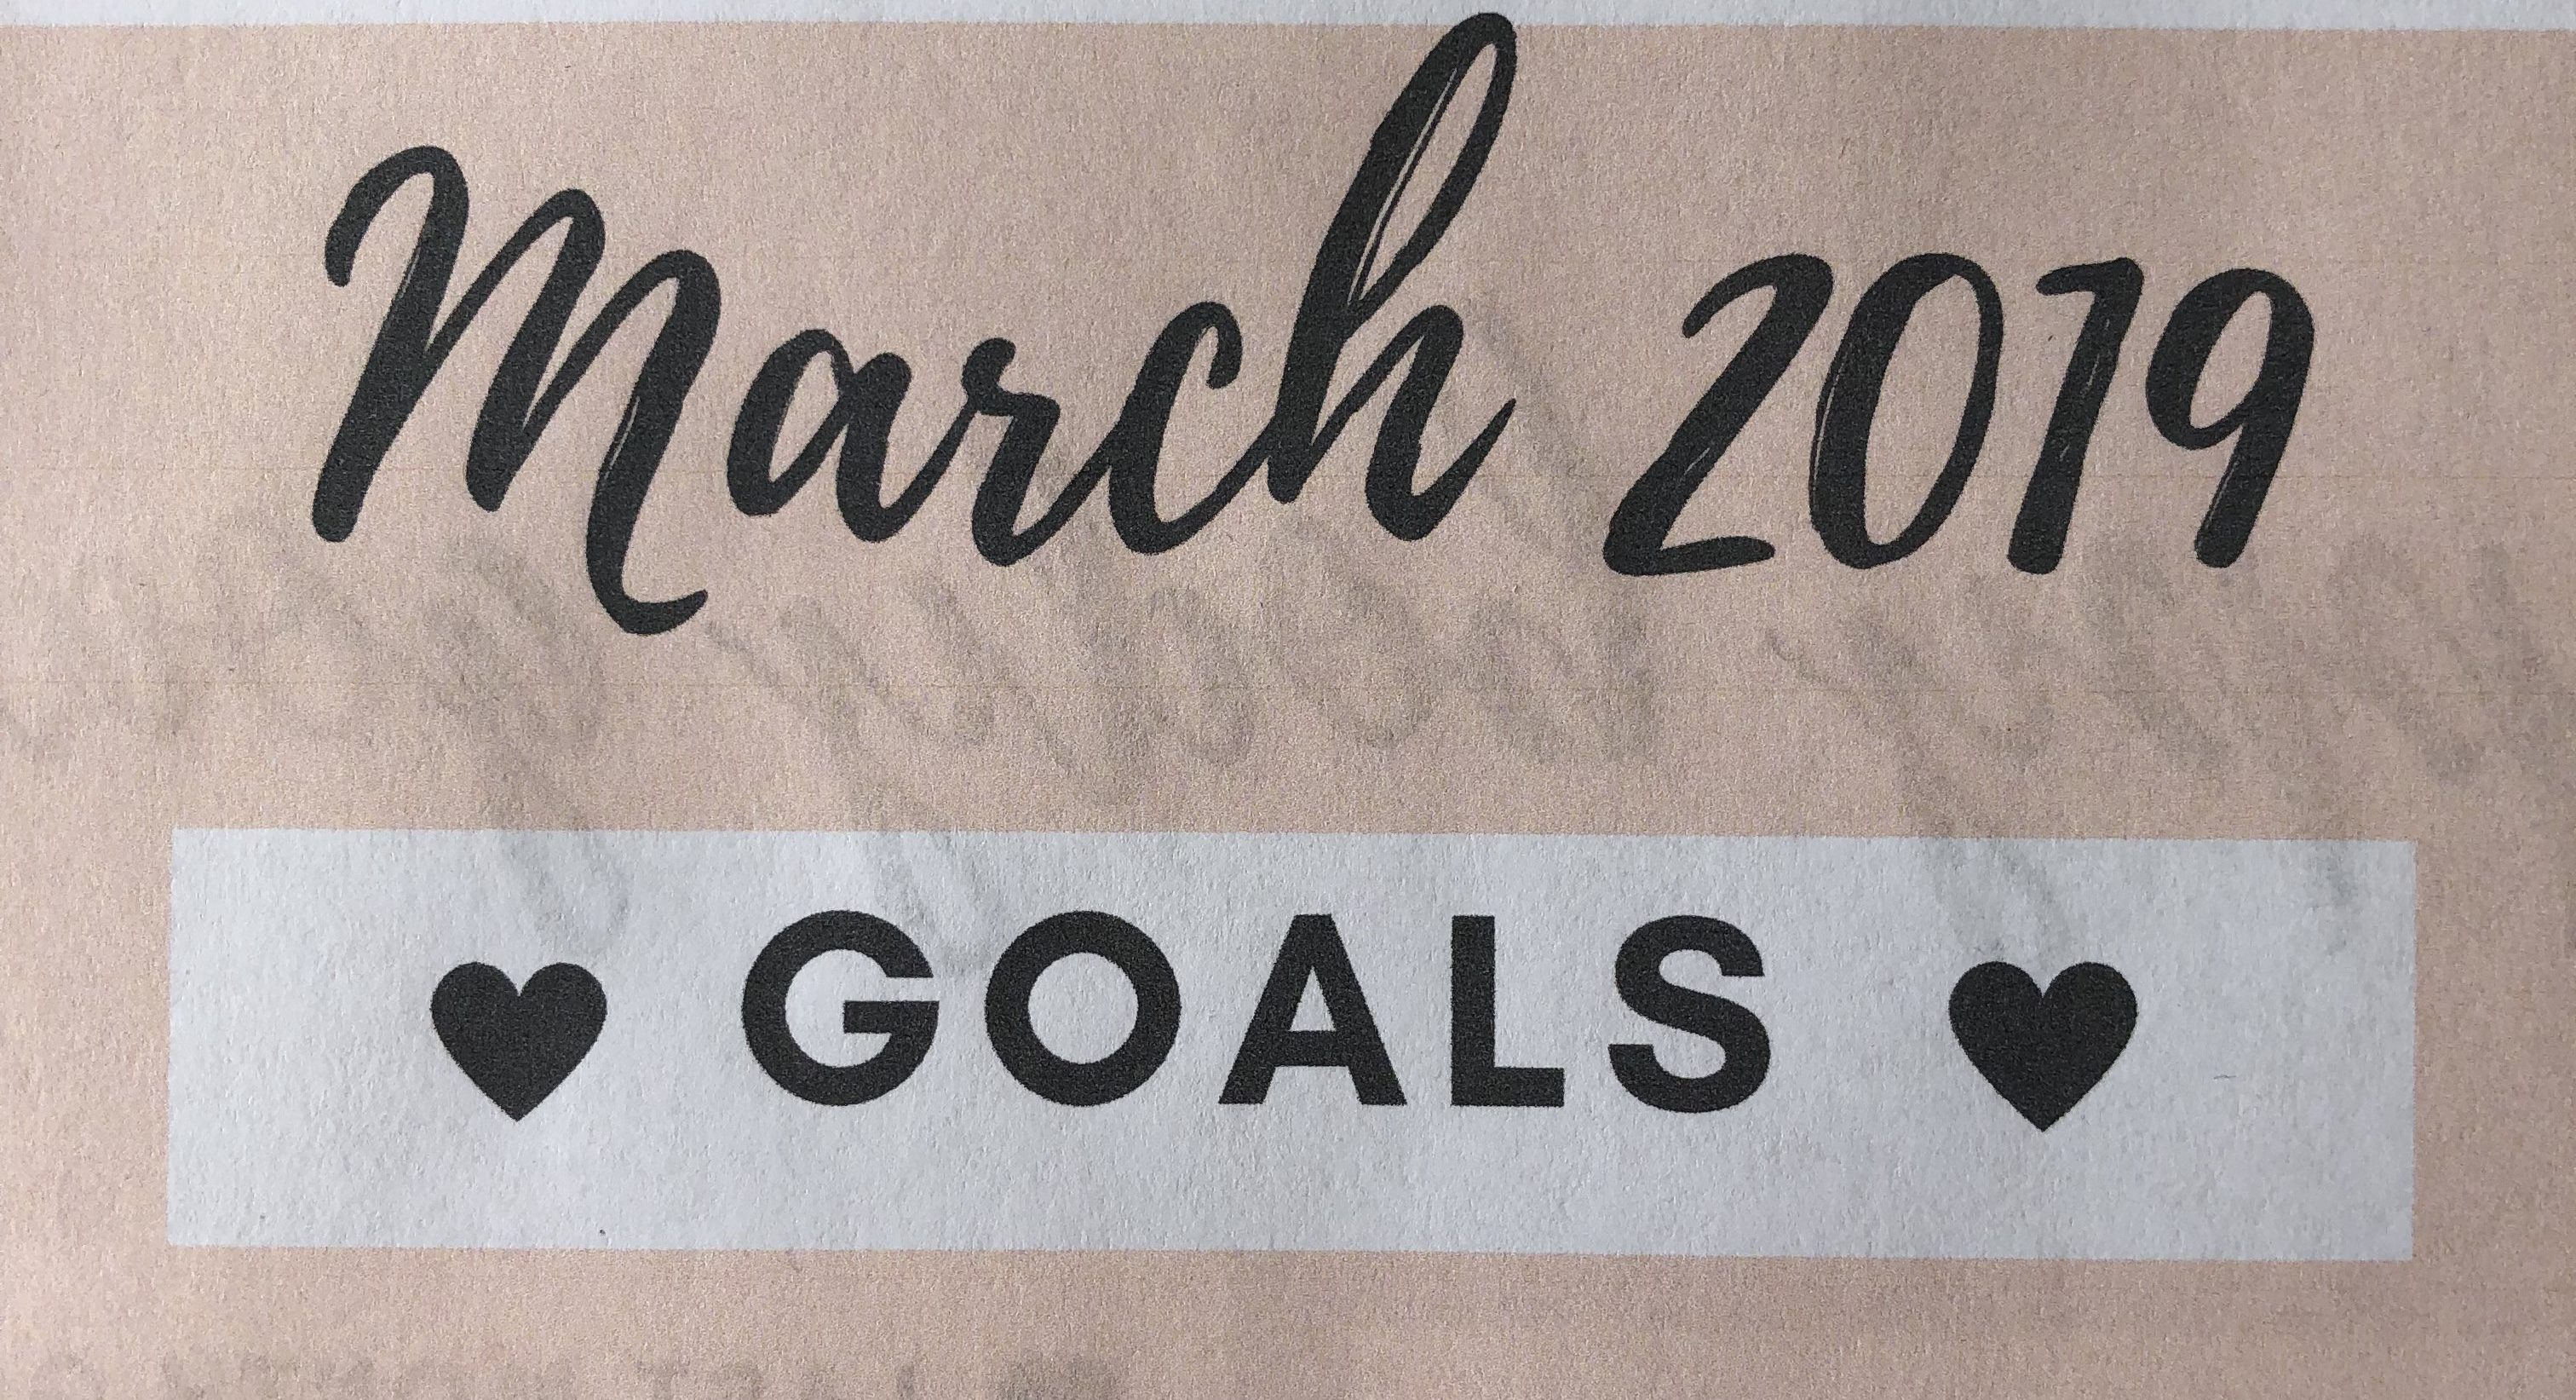 March 2019 Goals